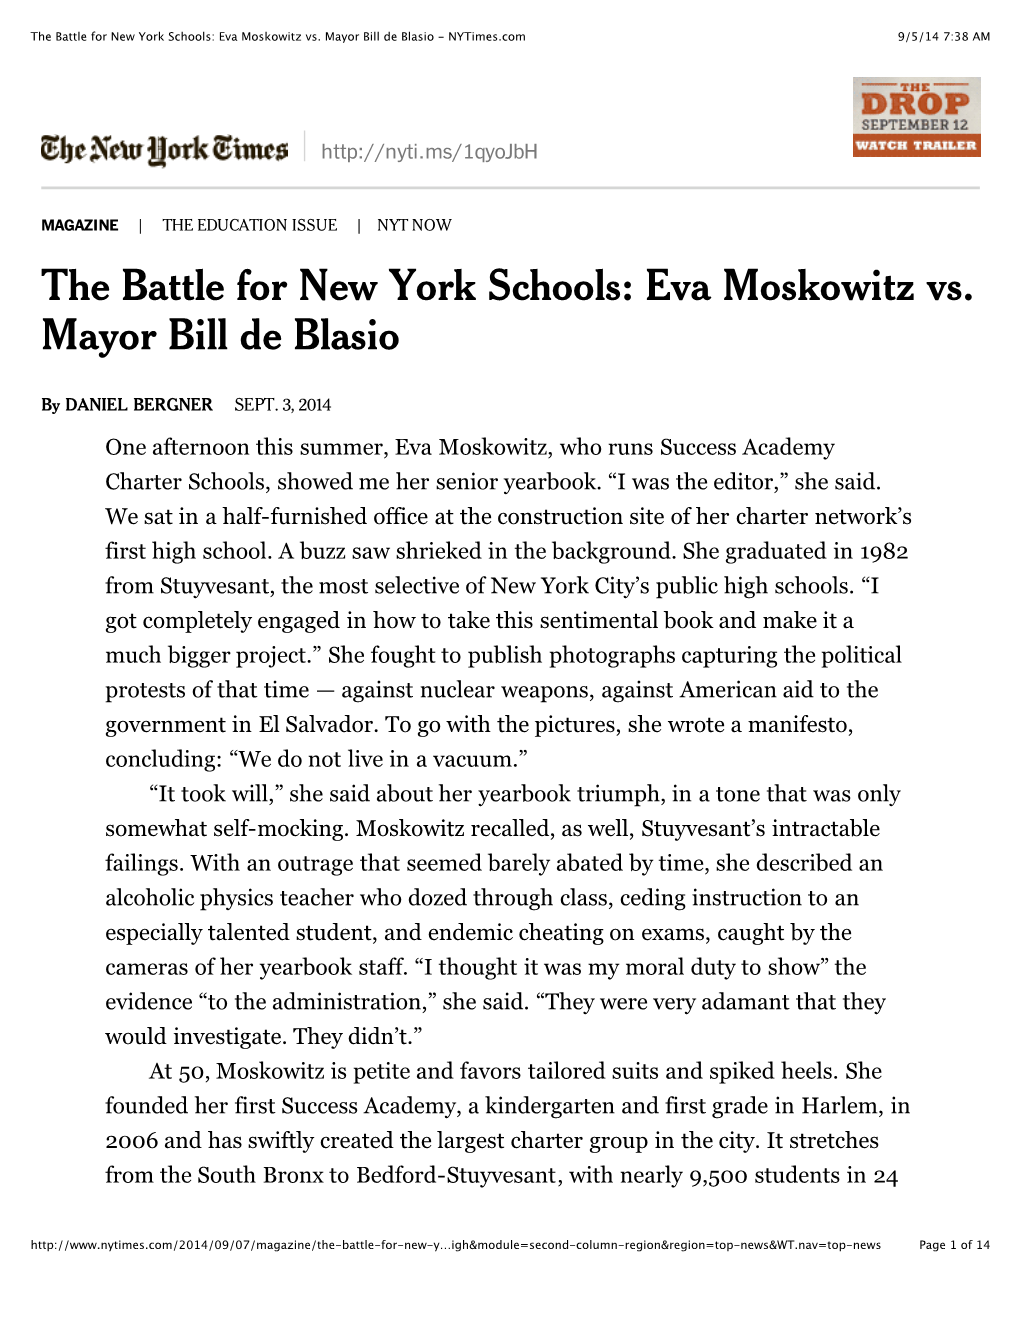 The Battle for New York Schools: Eva Moskowitz Vs. Mayor Bill De Blasio - Nytimes.Com 9/5/14 7:38 AM